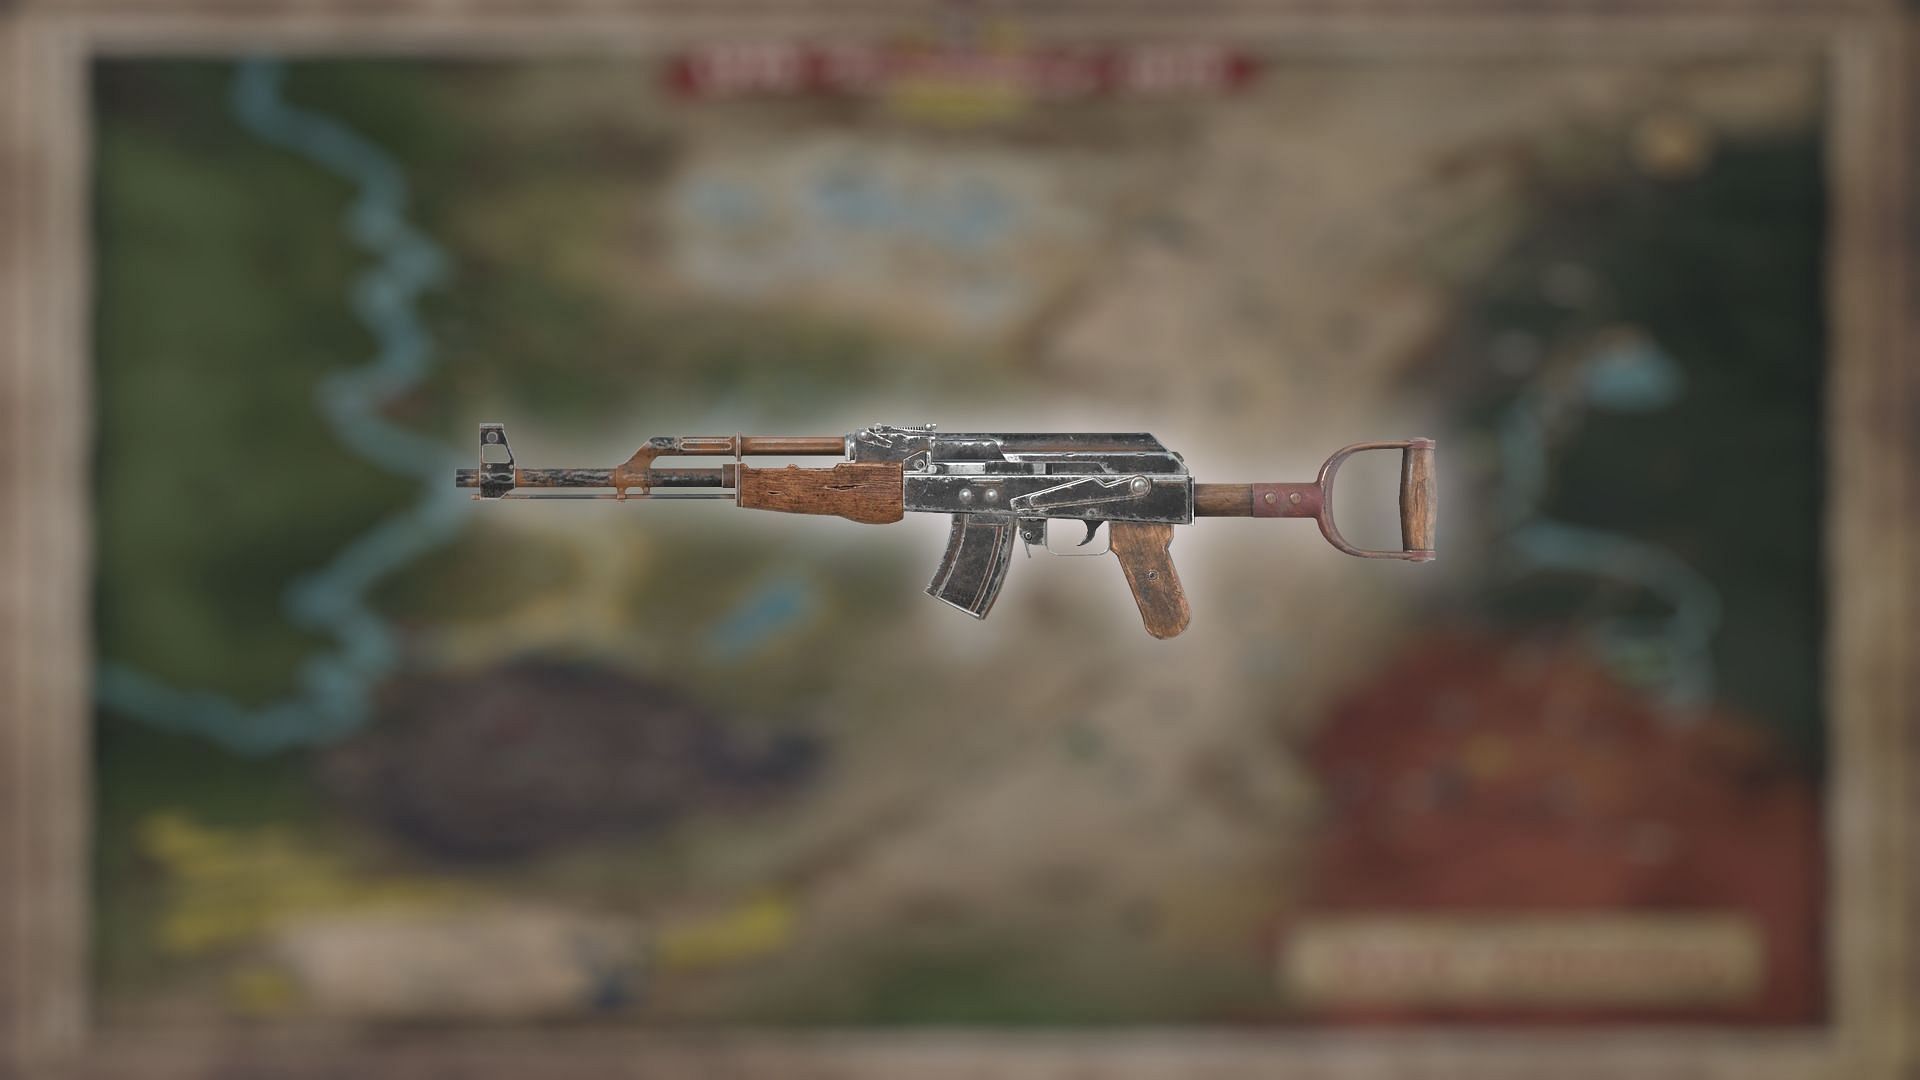 The Handmade Rifle in Fallout 76 (Image via Bethesda Game Studios)